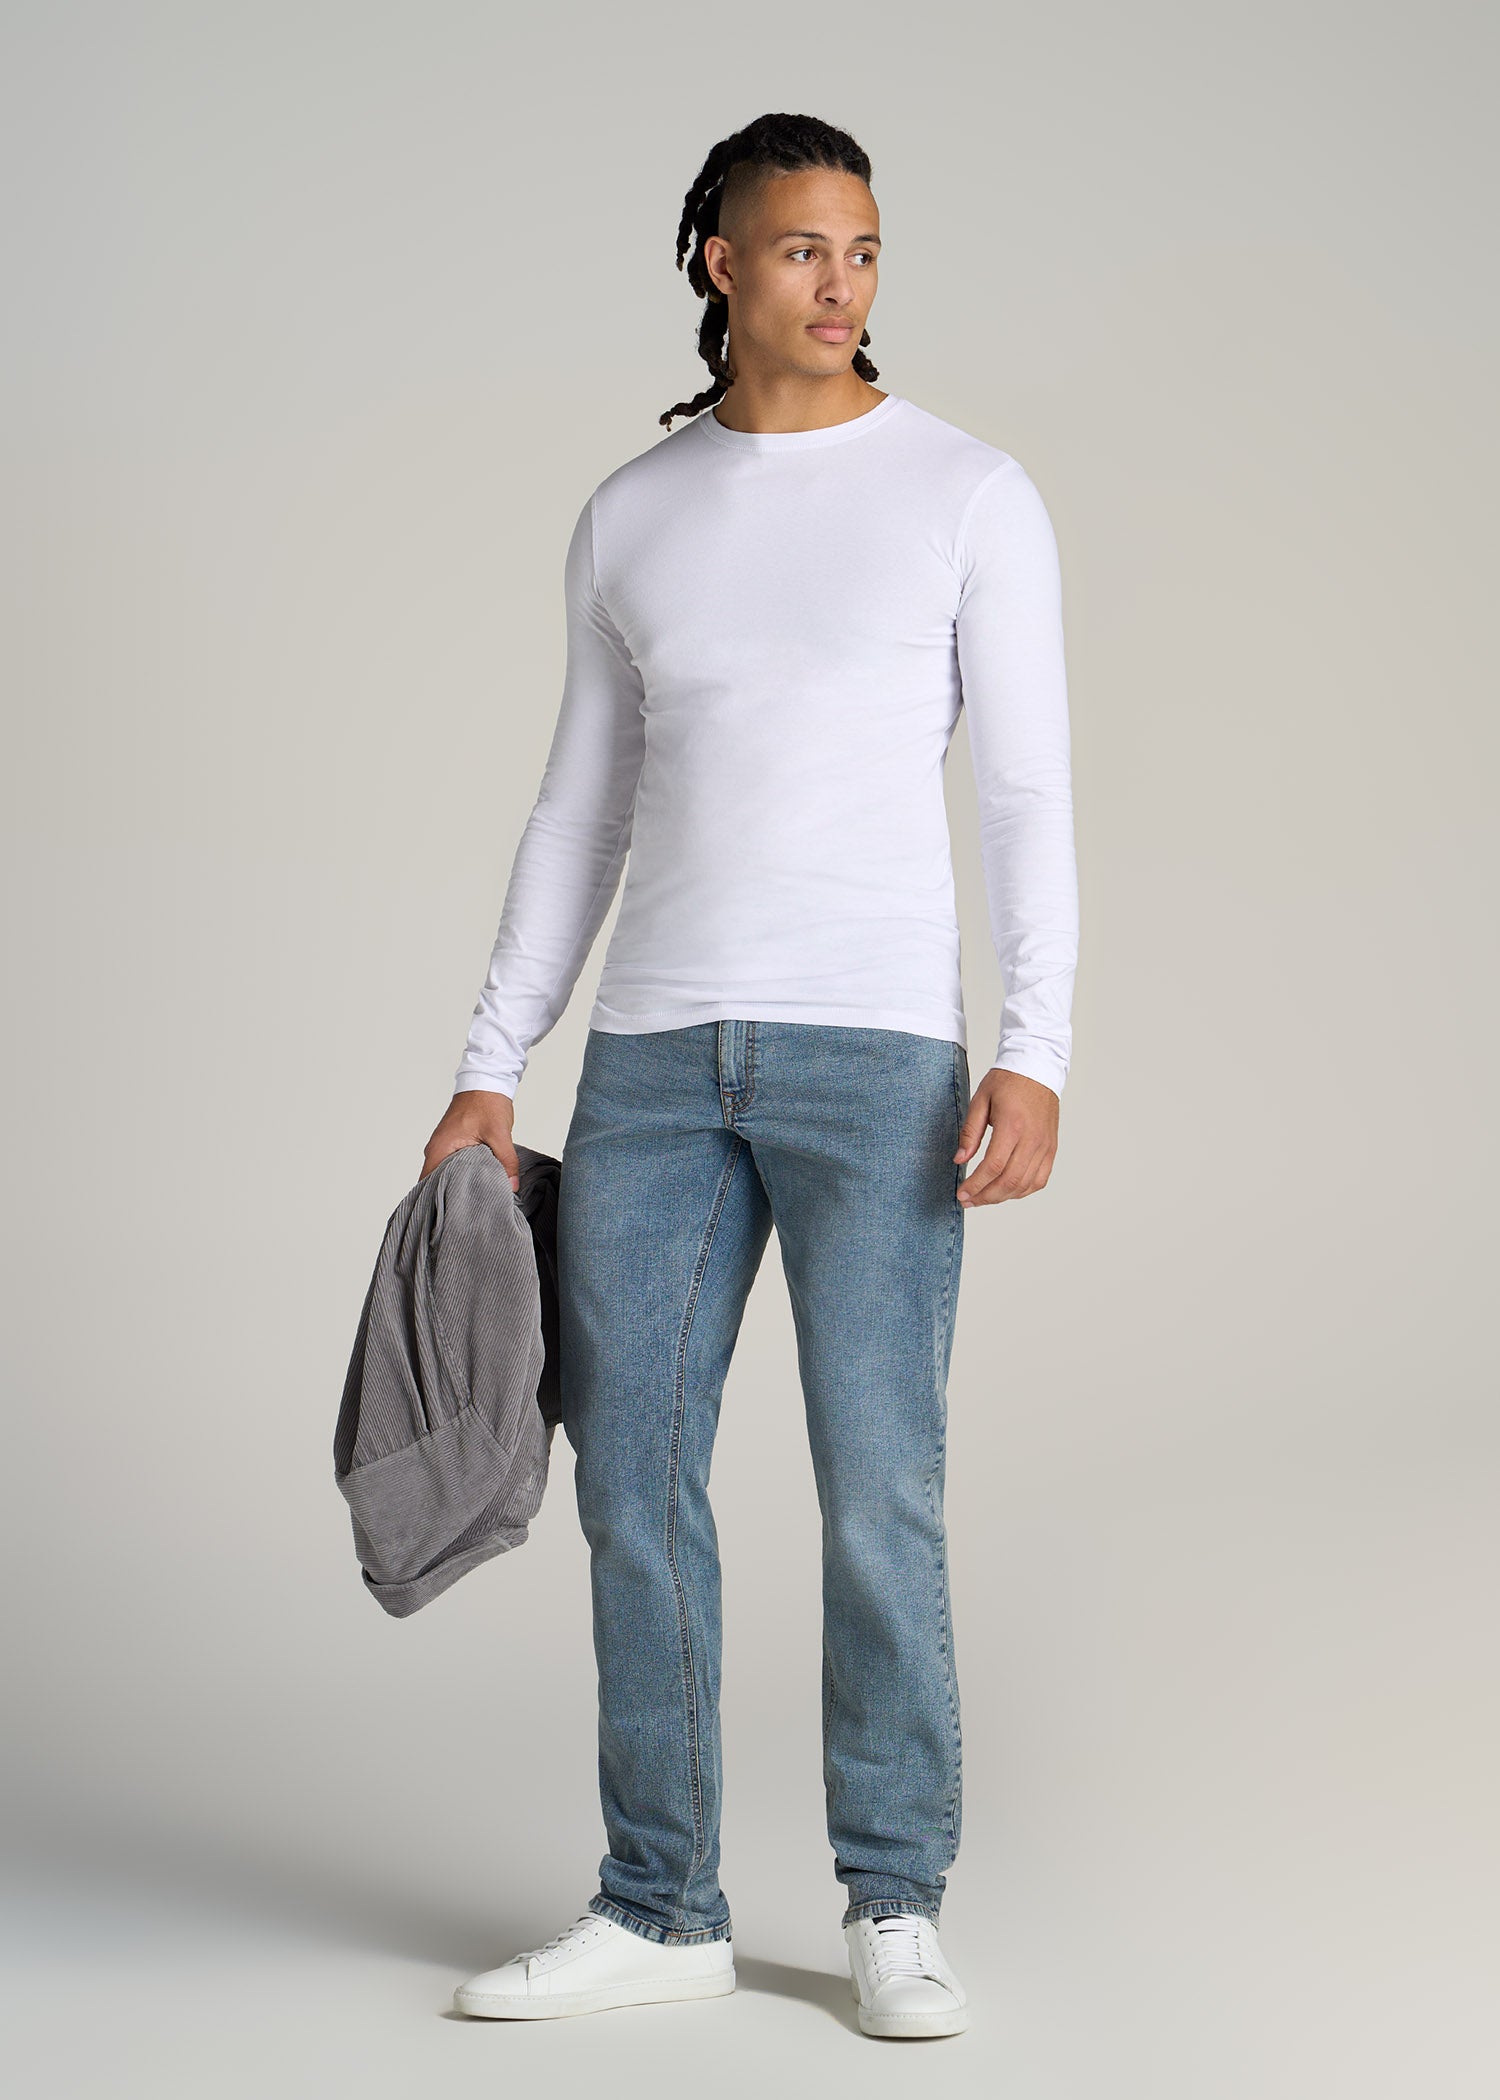 venom Matematisk Hofte Slim Long Sleeve T Shirt: Tall Men's Slim Fit White Tee – American Tall